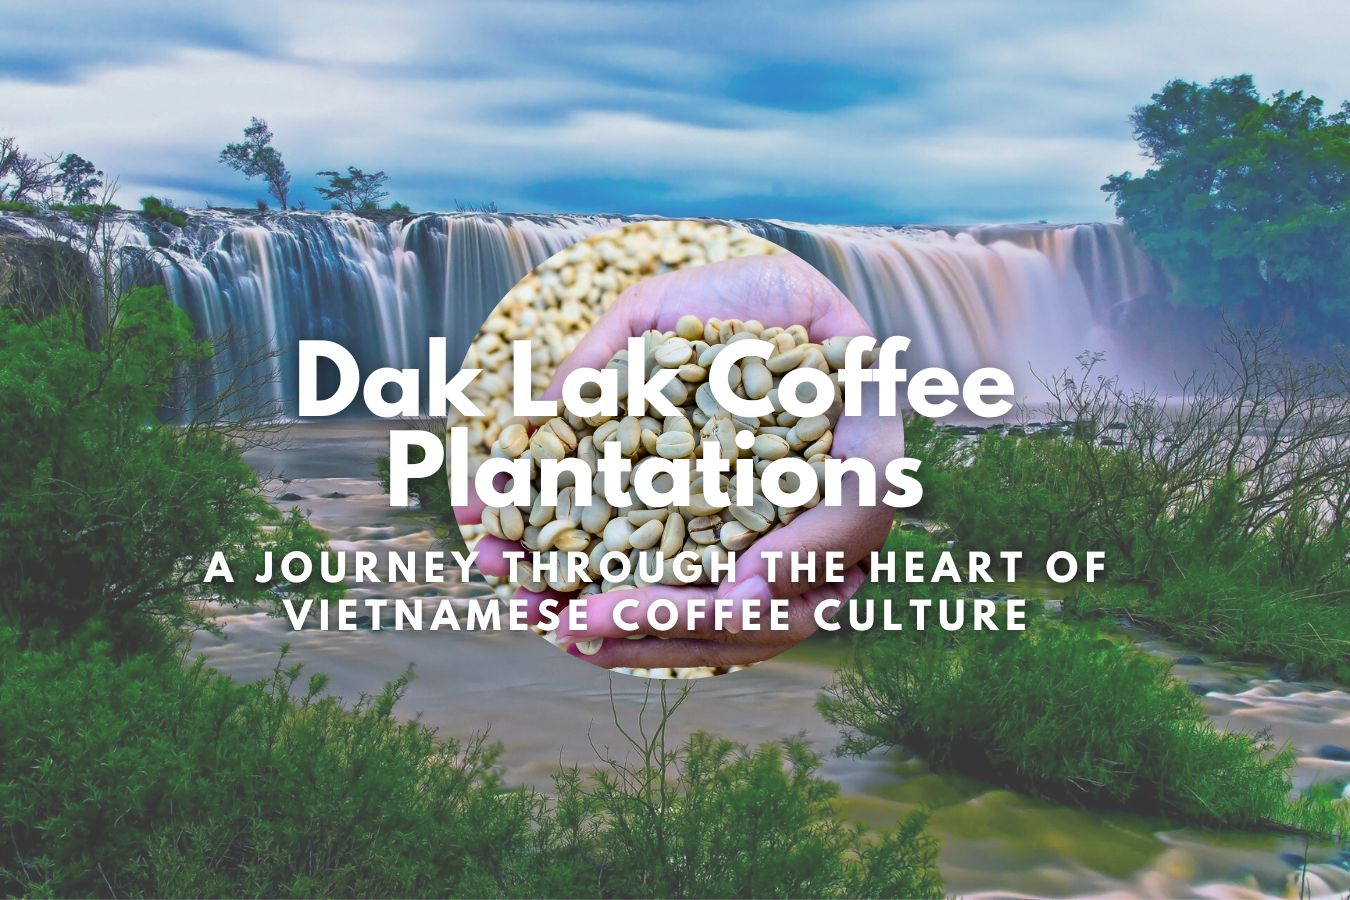 Dak Lak Coffee Plantations A Journey Through the Heart of Vietnamese Coffee Culture